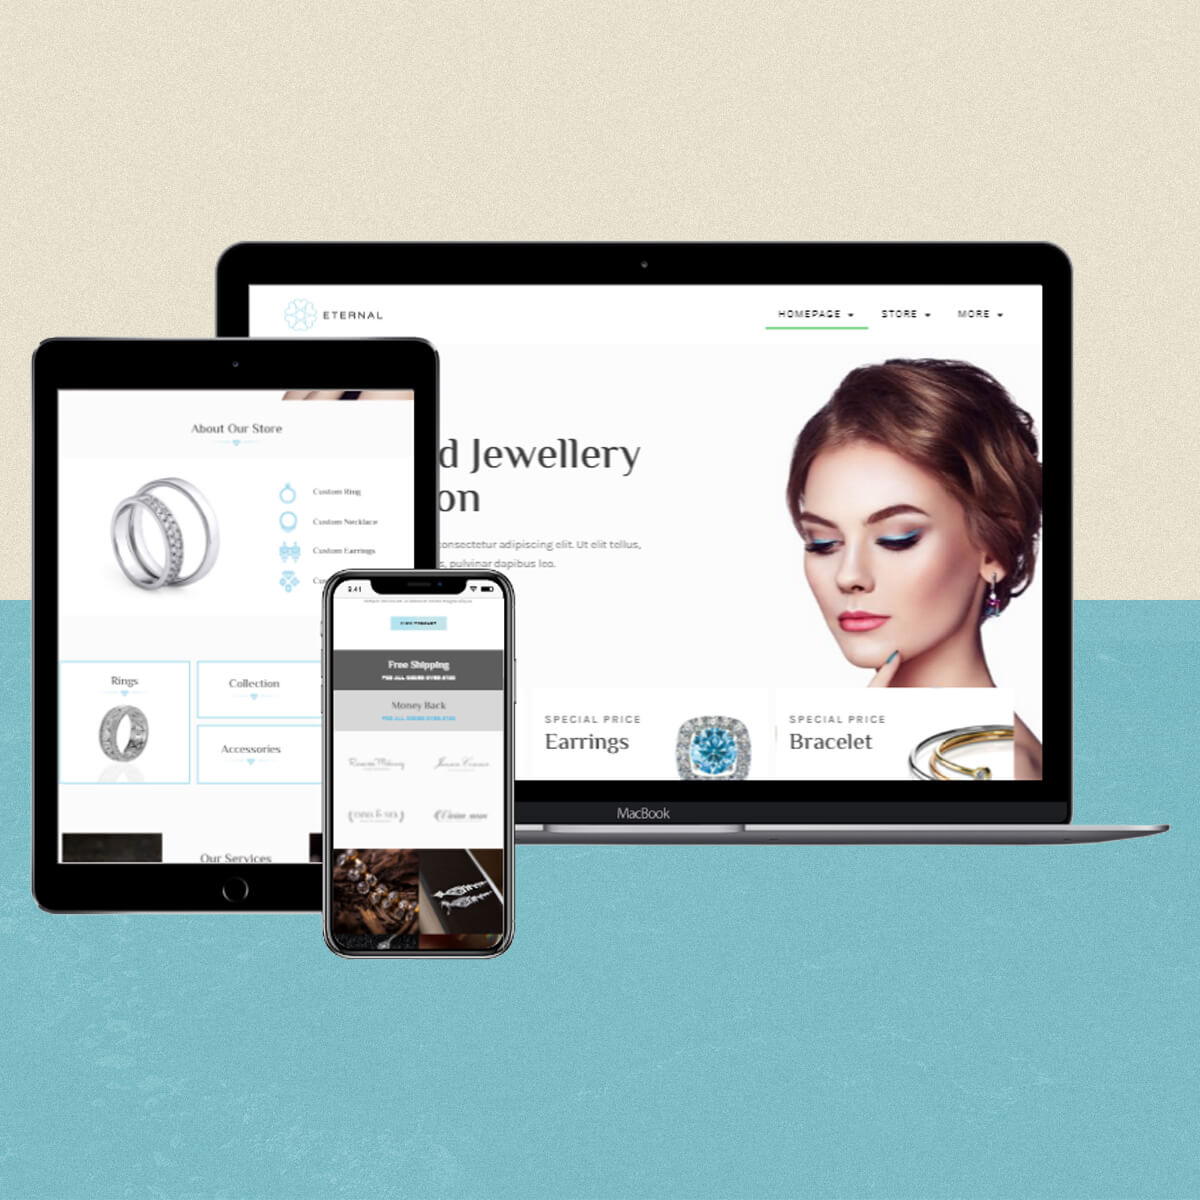 Eternal-jewelry-website-design-webvizion